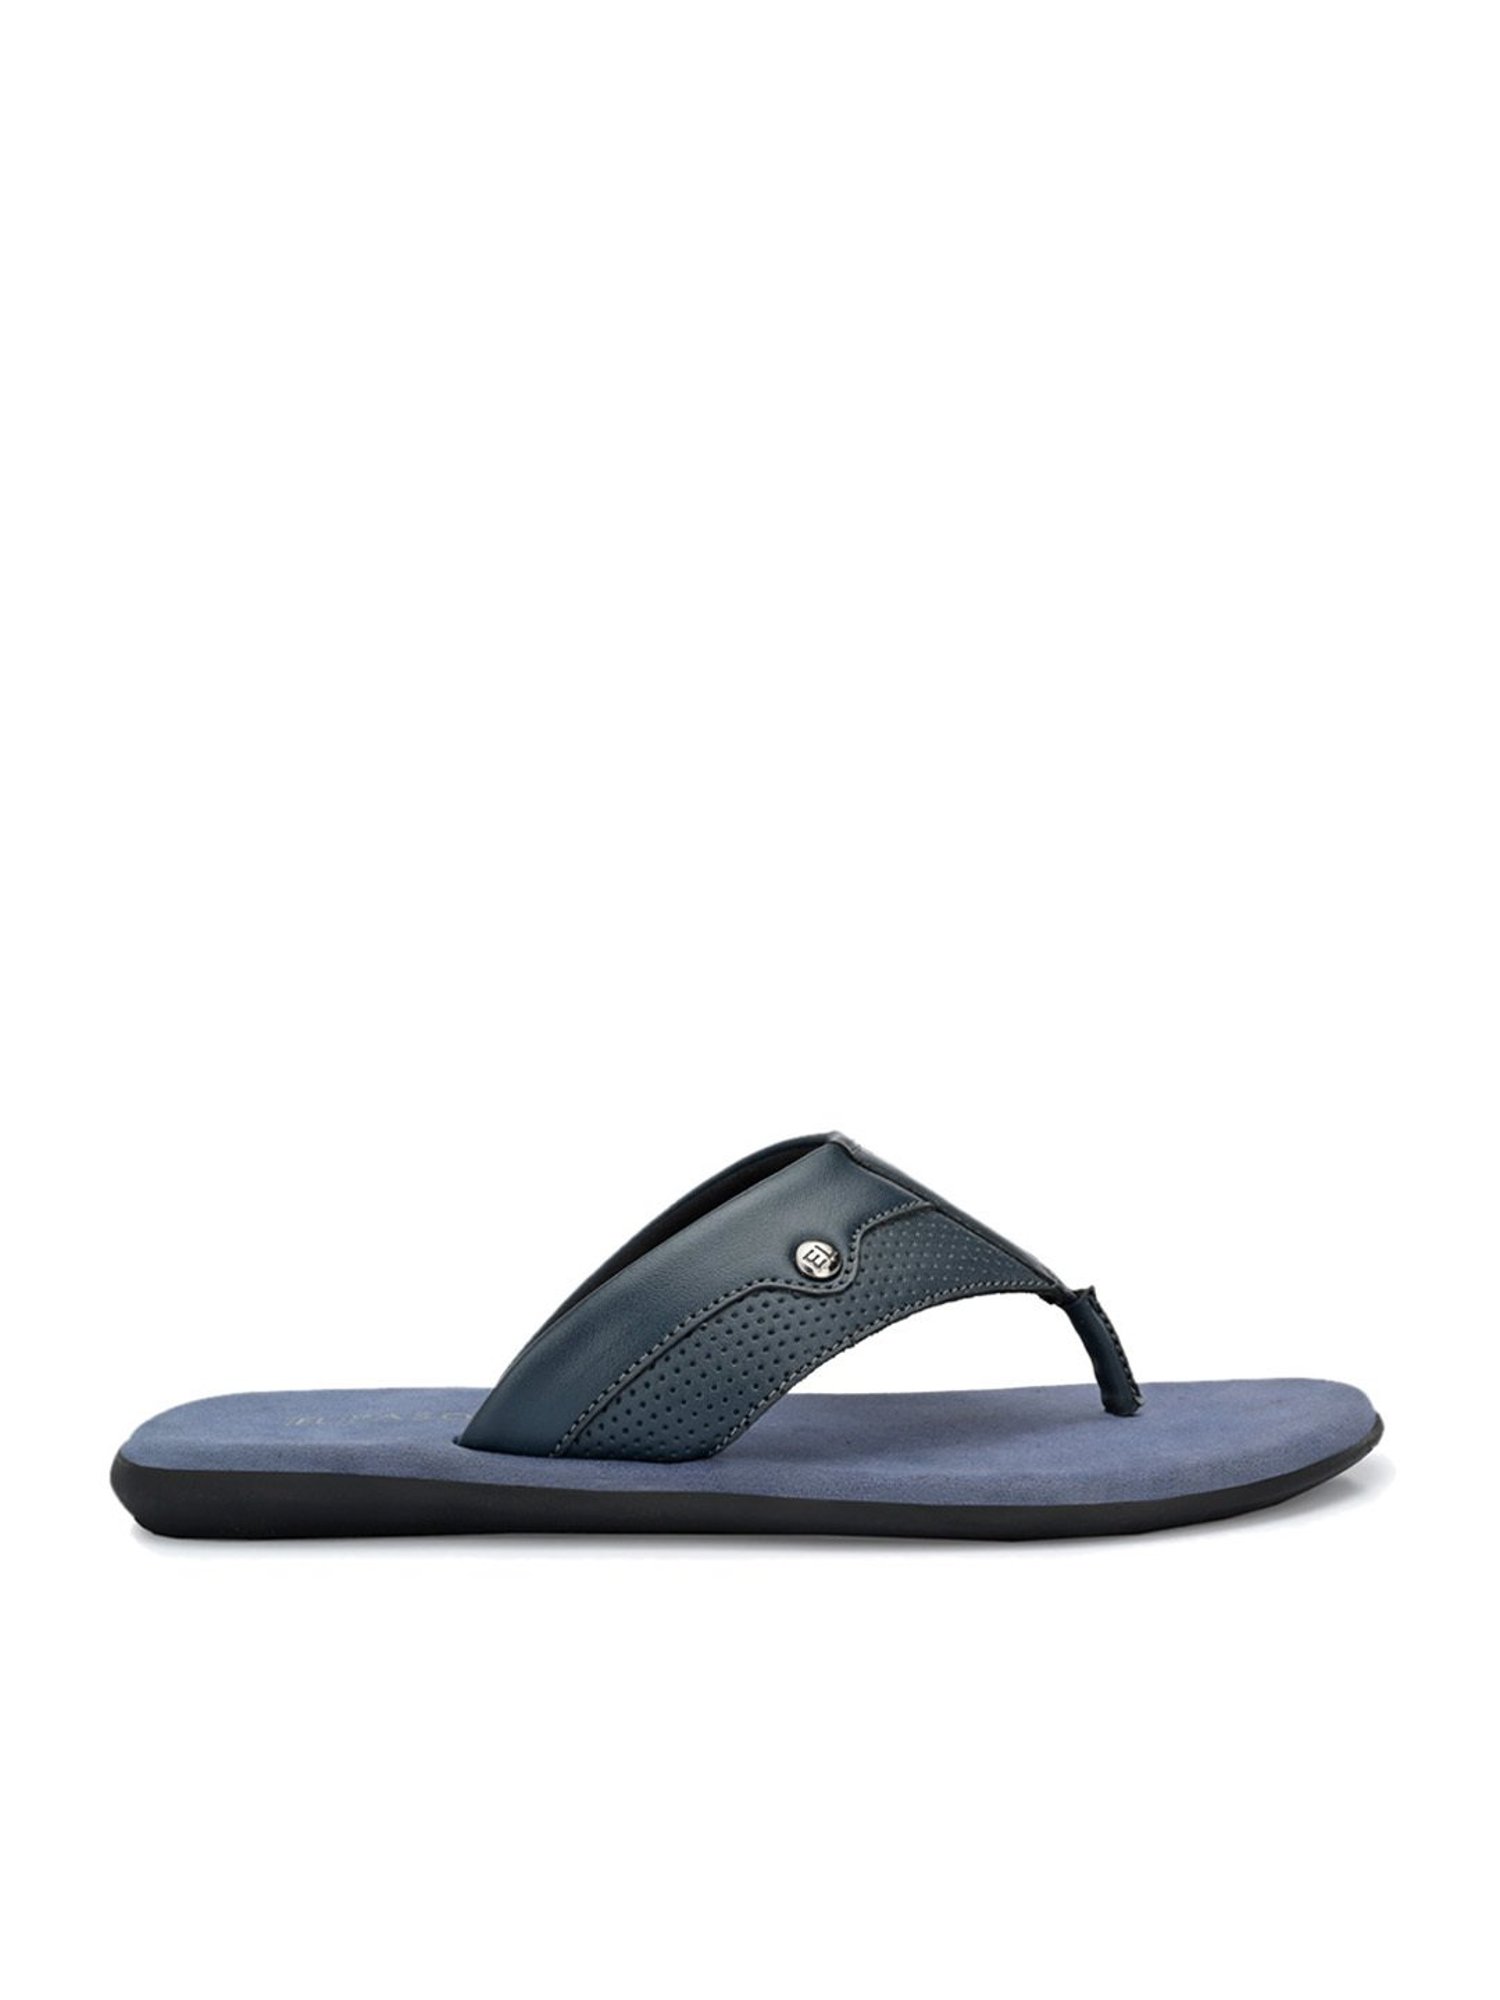 Buy El Paso Men Black & Tan Comfort Sandals - Sandals for Men 15186950 |  Myntra